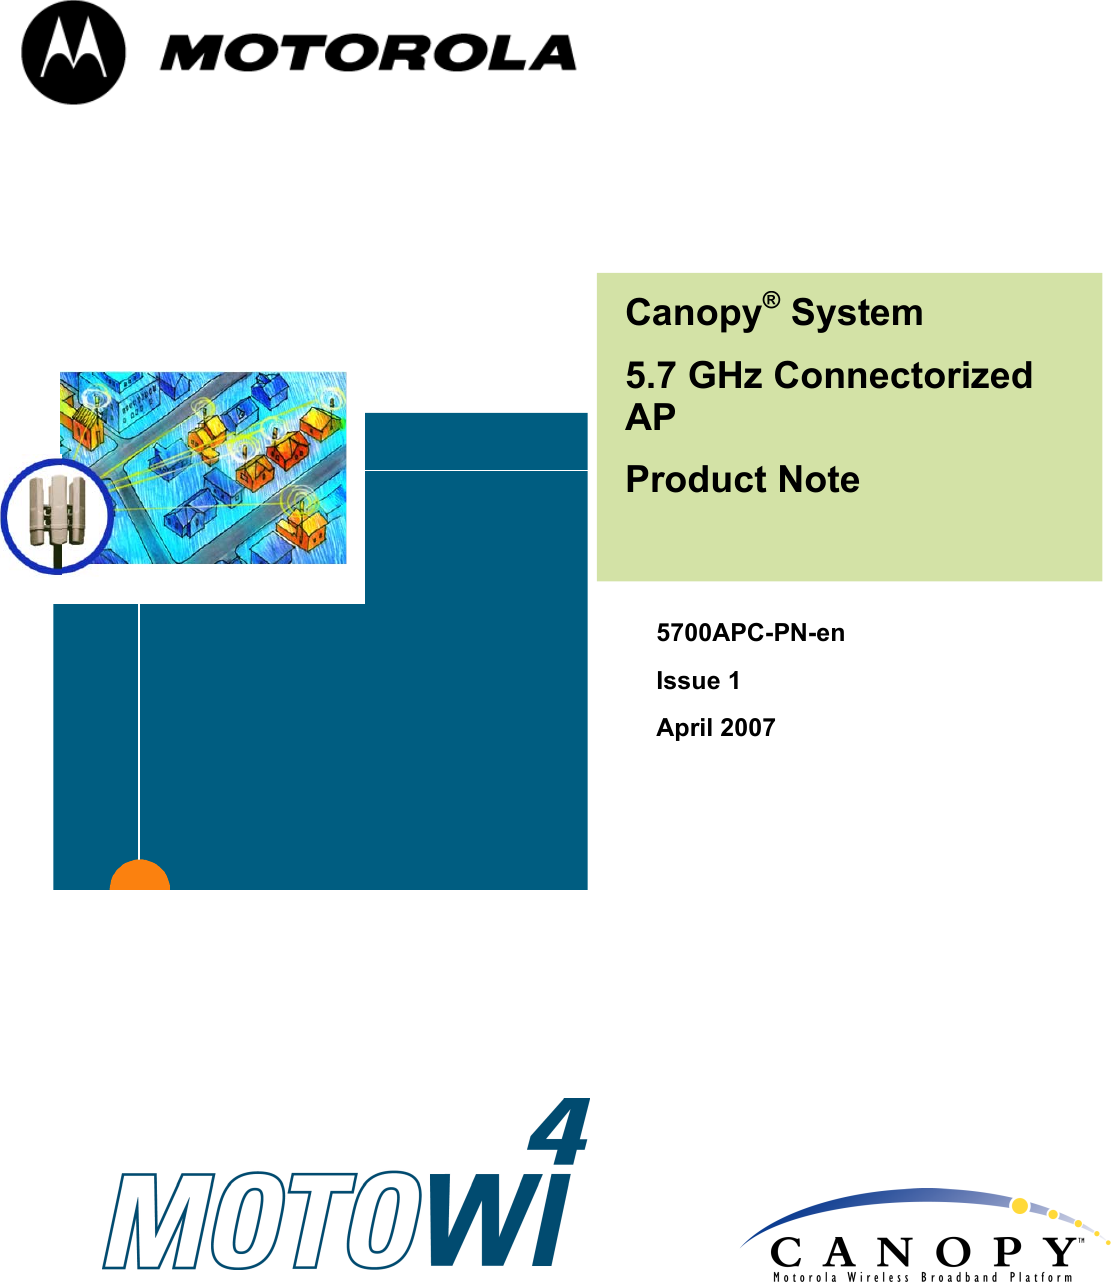                                   5700APC-PN-en Issue 1 April 2007    Canopy® System 5.7 GHz Connectorized AP Product Note 